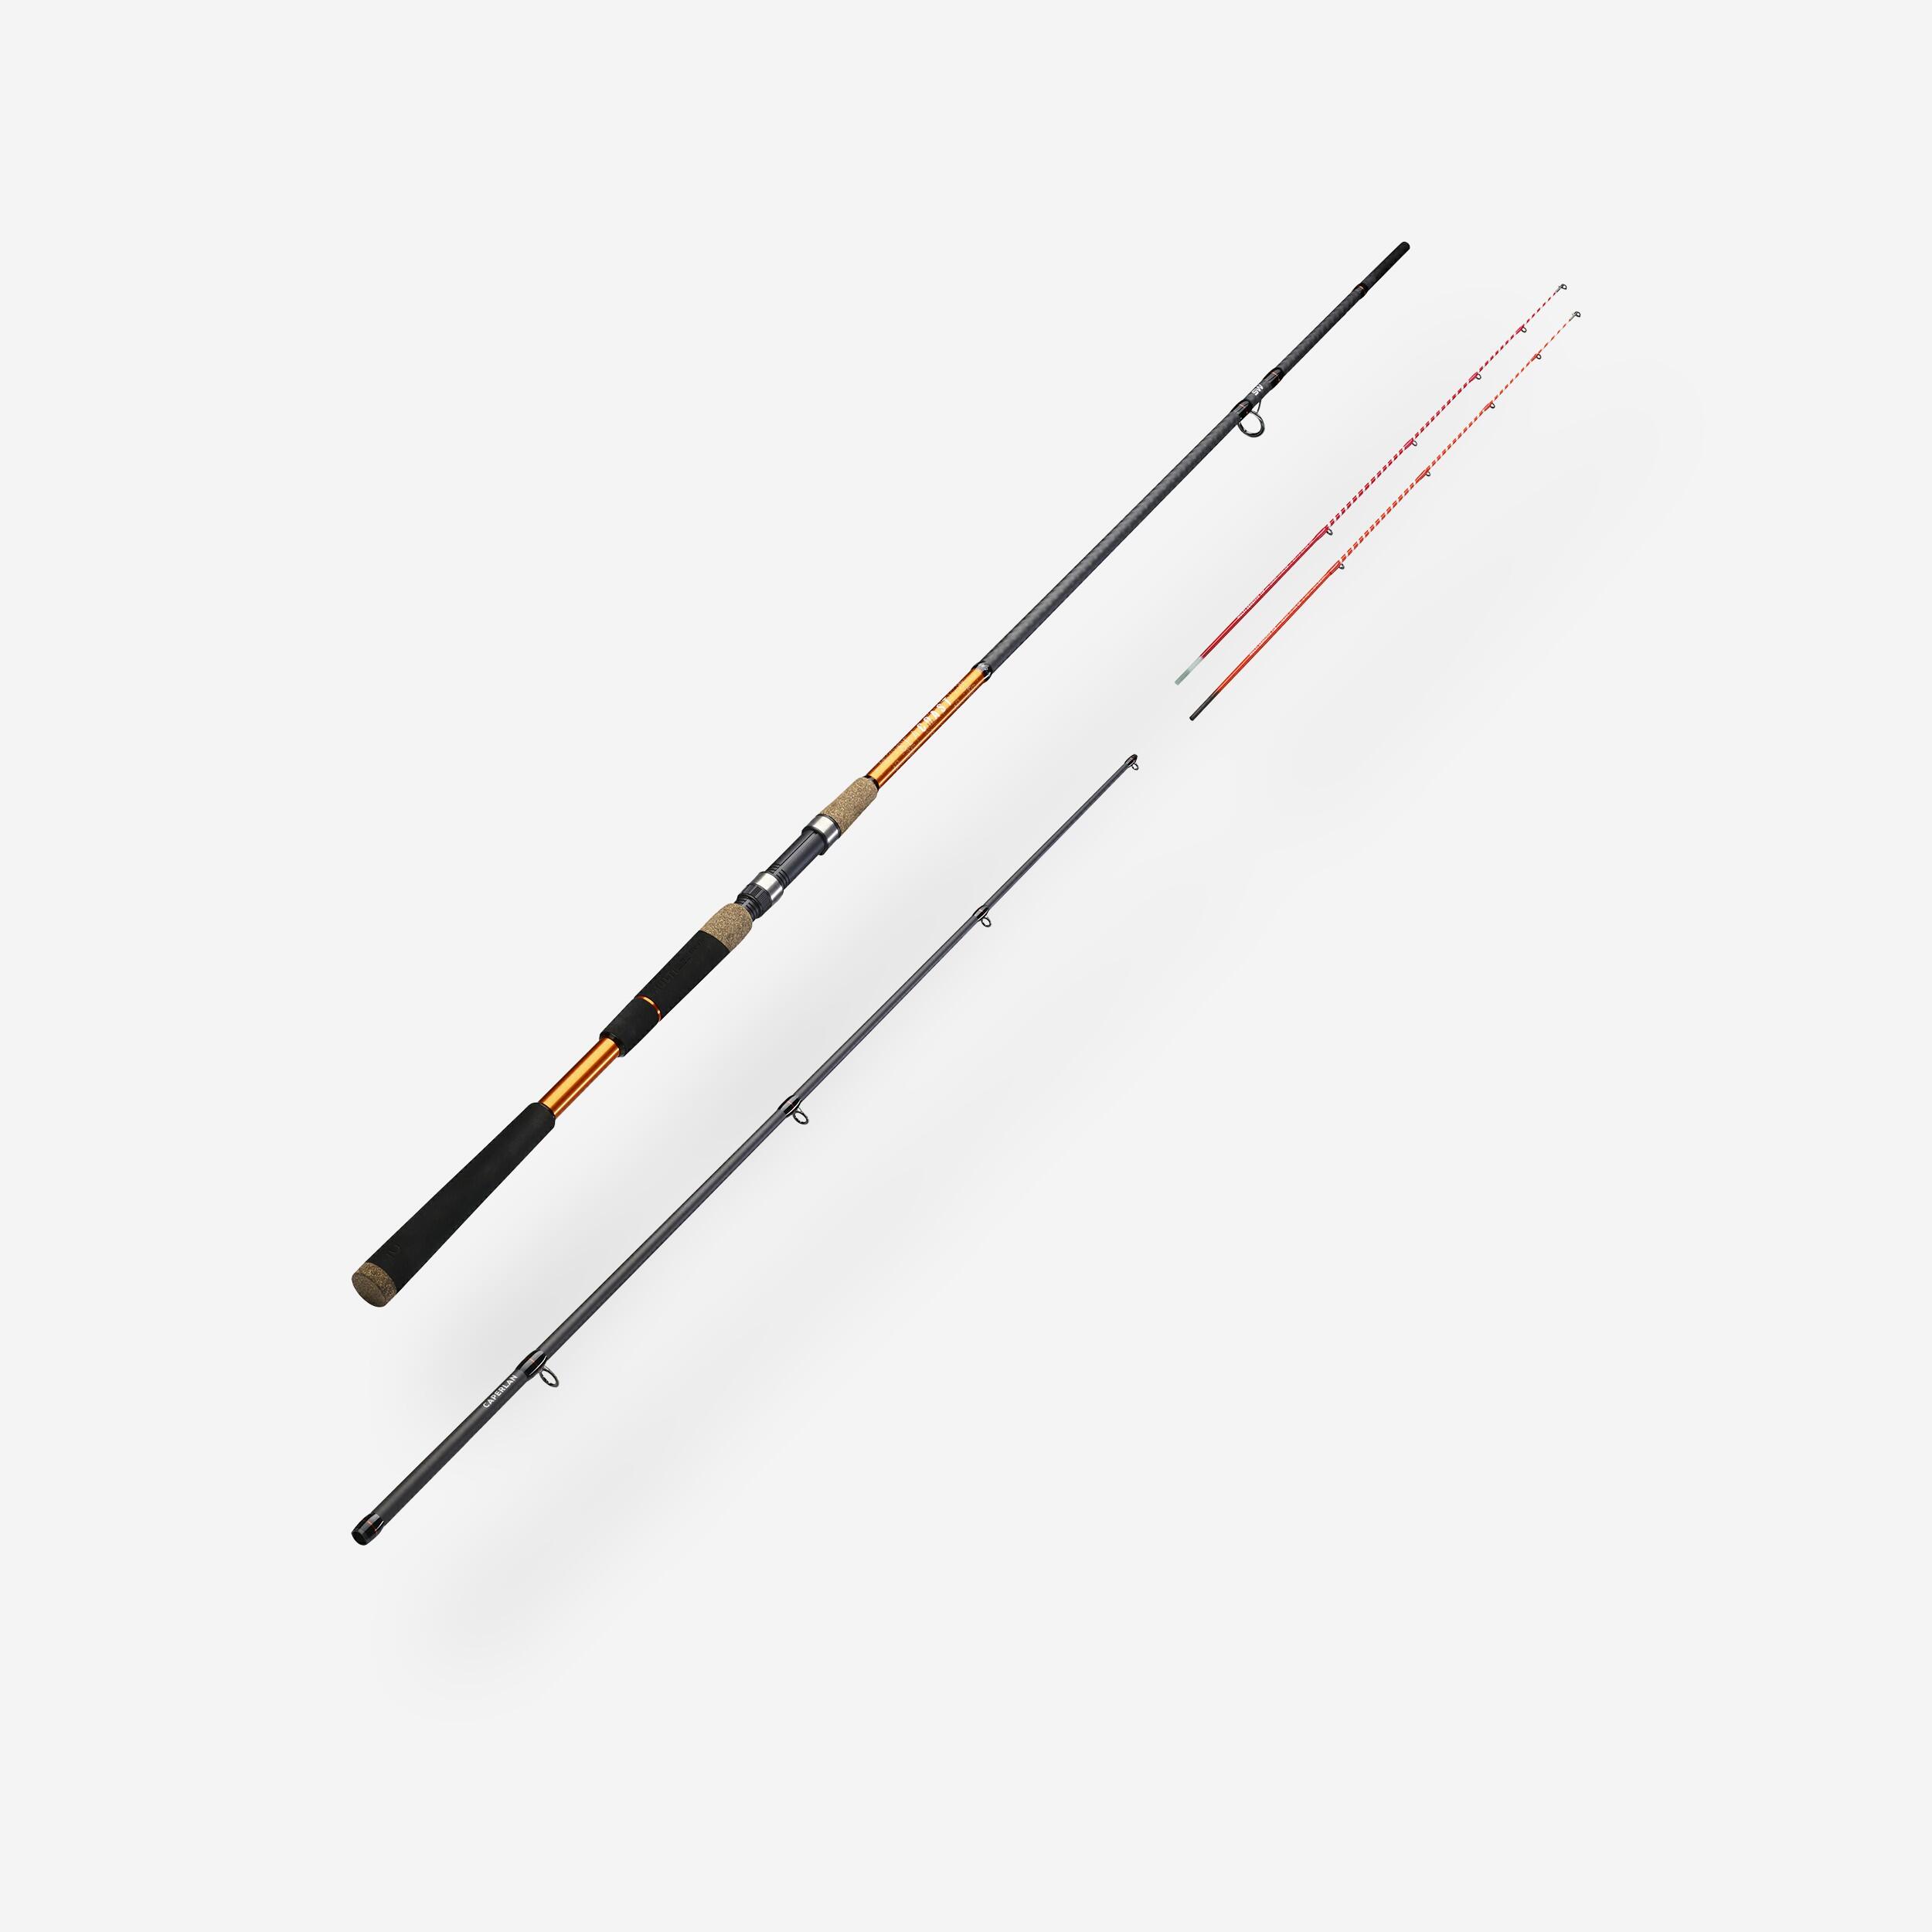 Exotic fishing rod KHAOS-900 243 100 lbs for tuna fishing in the